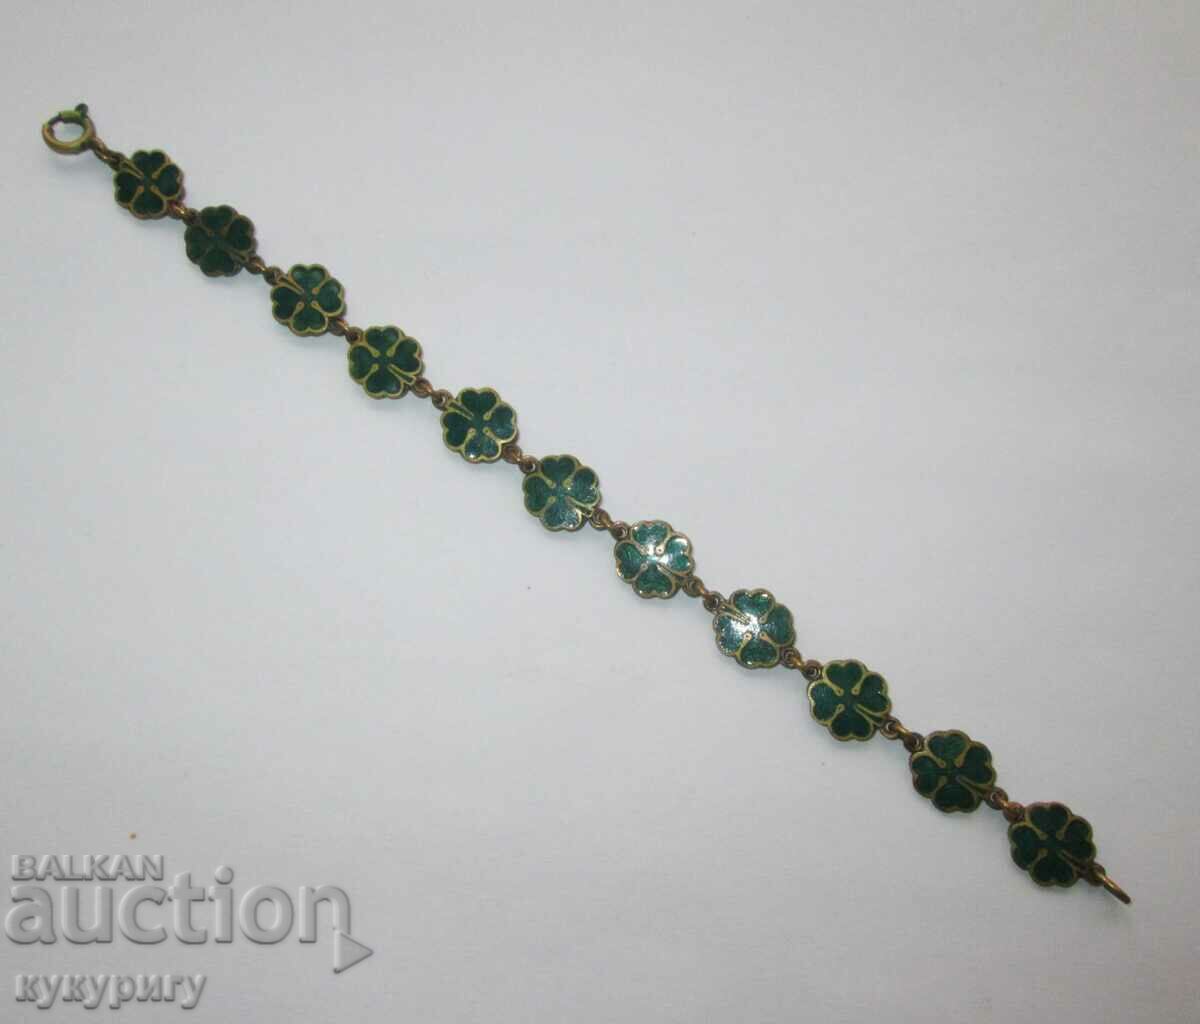 Old green enamel bracelet with four-leaf clovers for luck